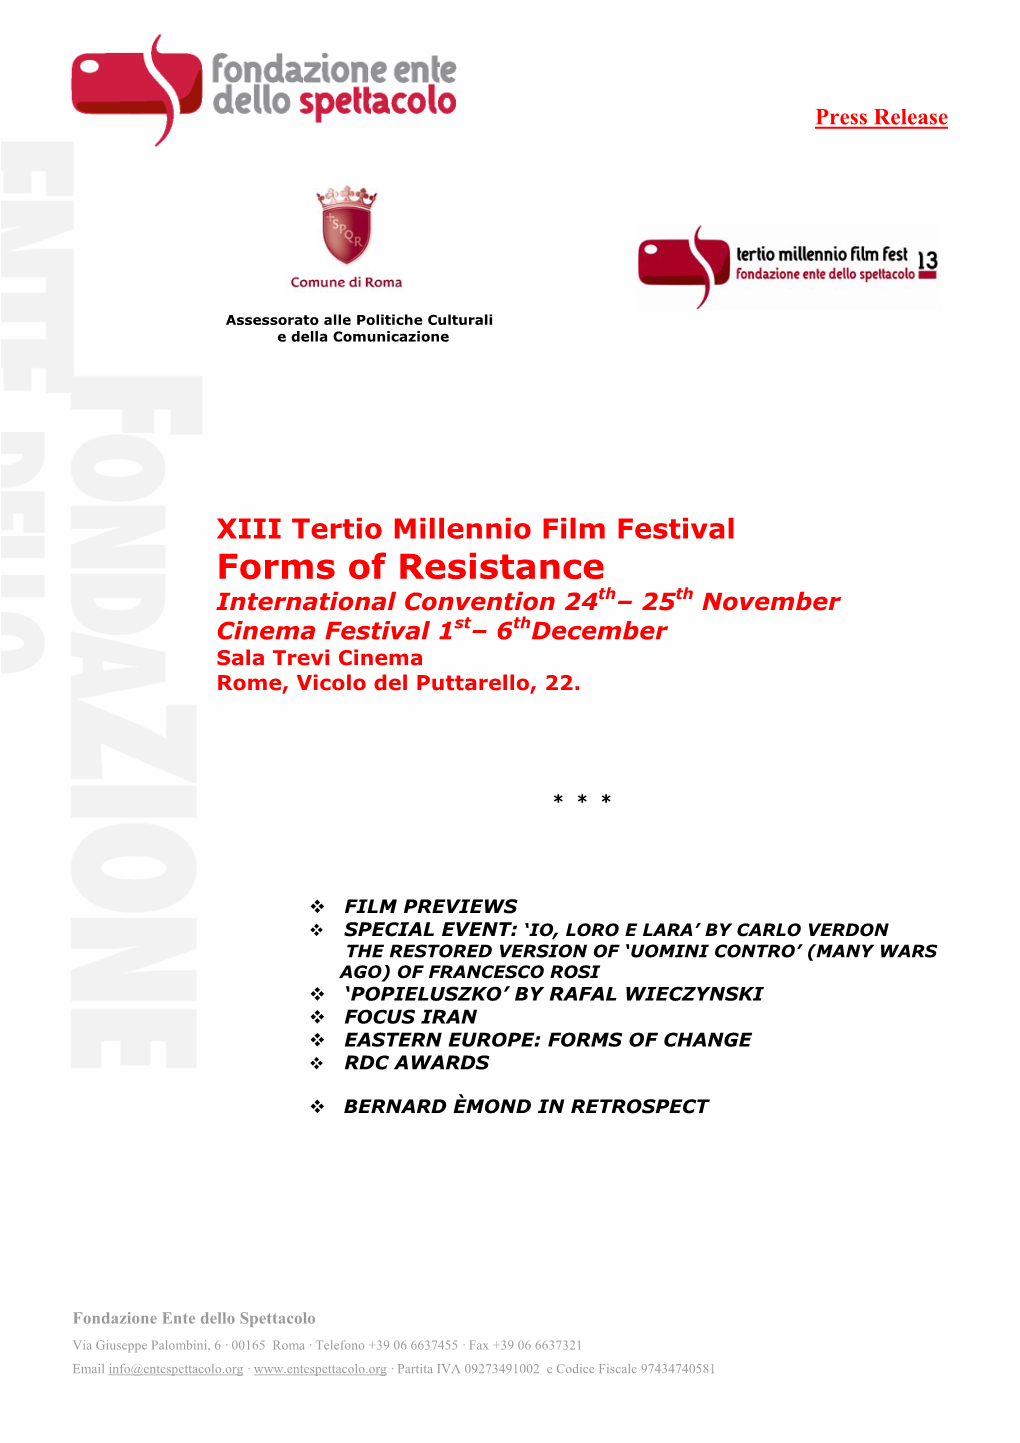 XIII Tertio Millennio Film Festival Forms of Resistance